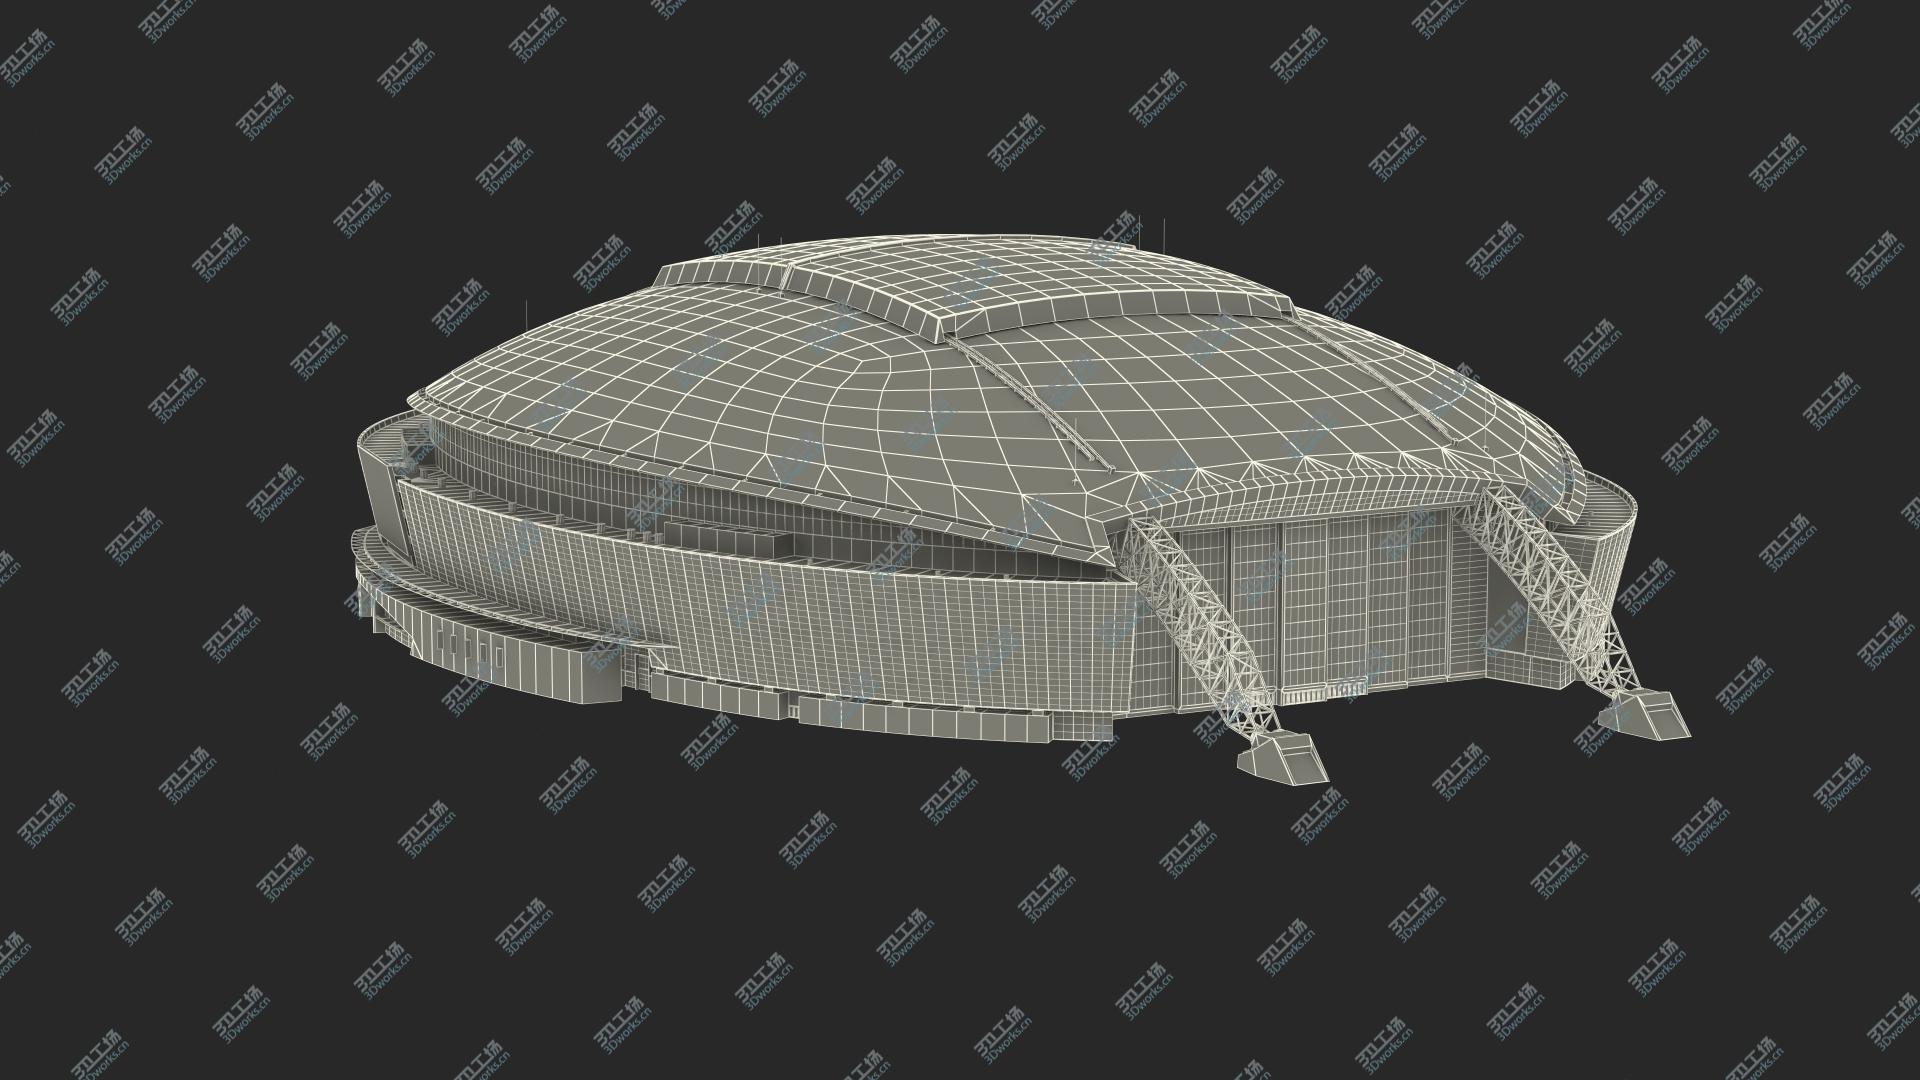 images/goods_img/20210319/3D Stadium Building/3.jpg